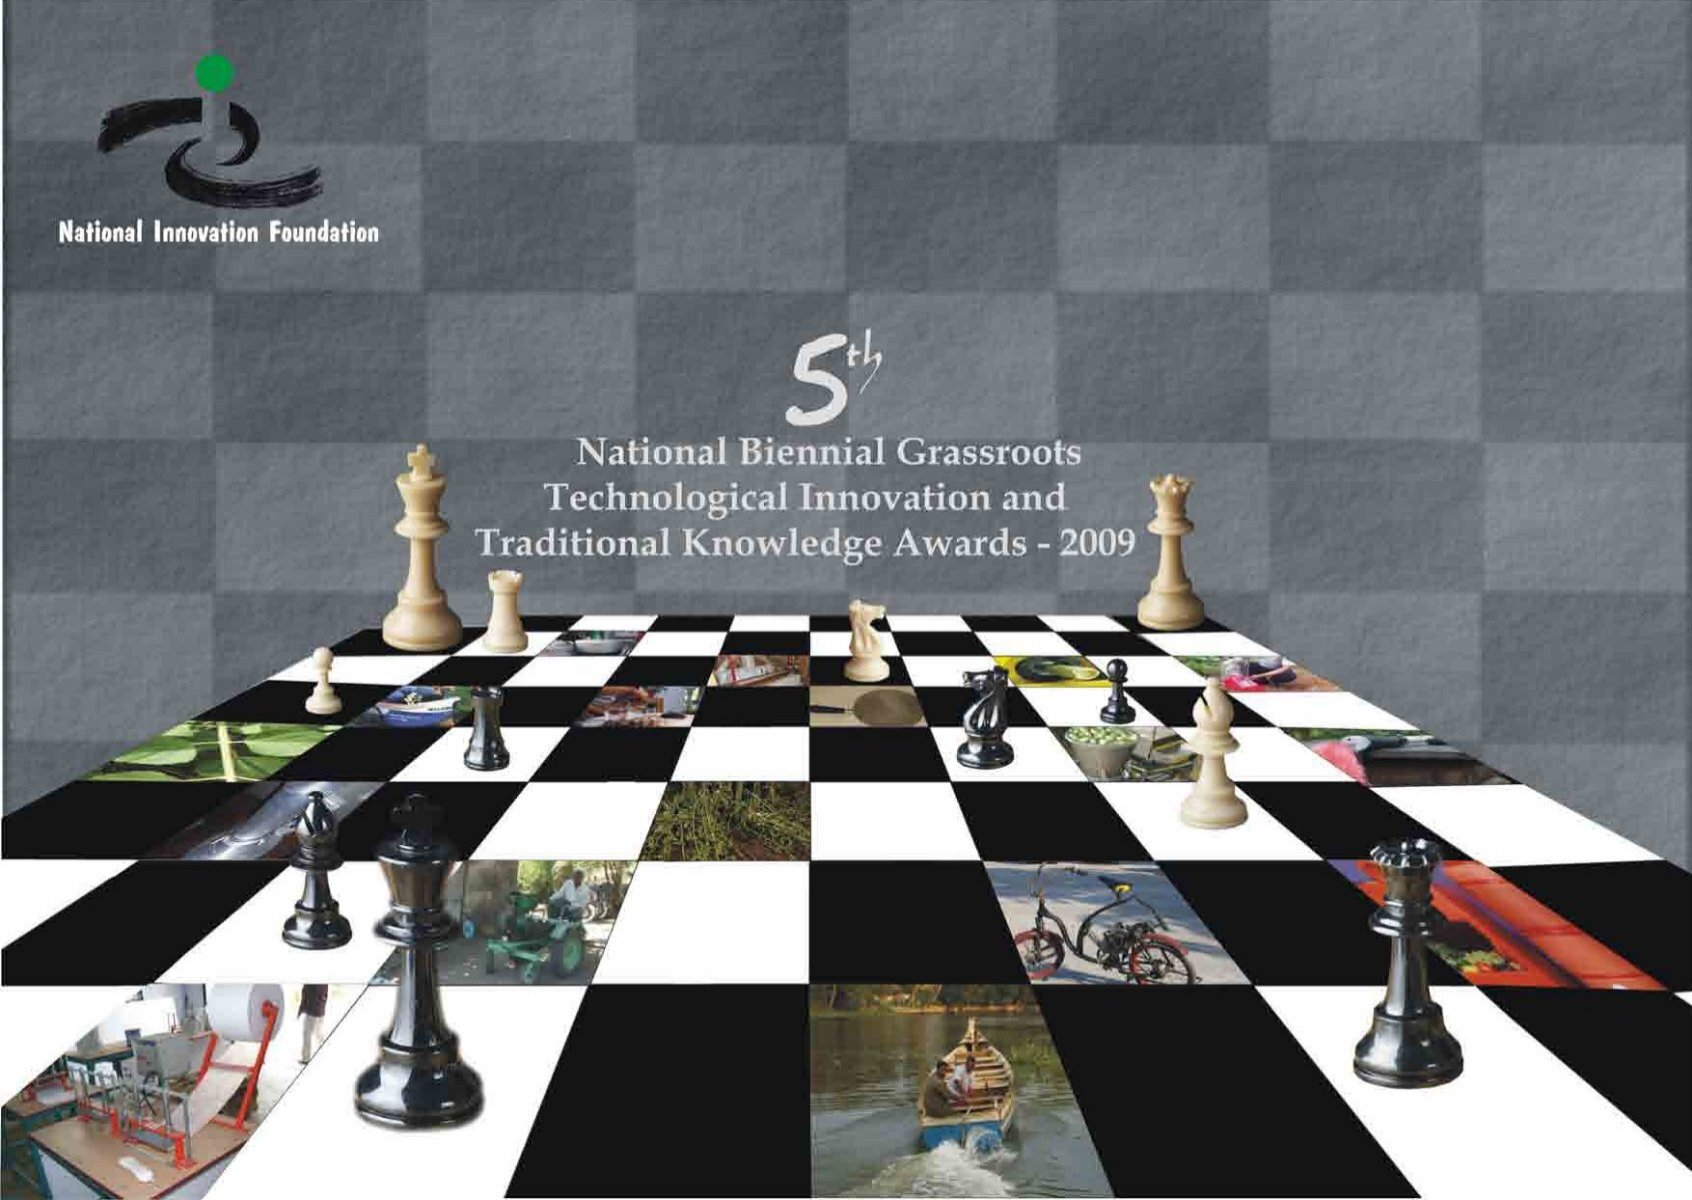 Puducherry's Peter Anand Wins World Amateur Chess Championship